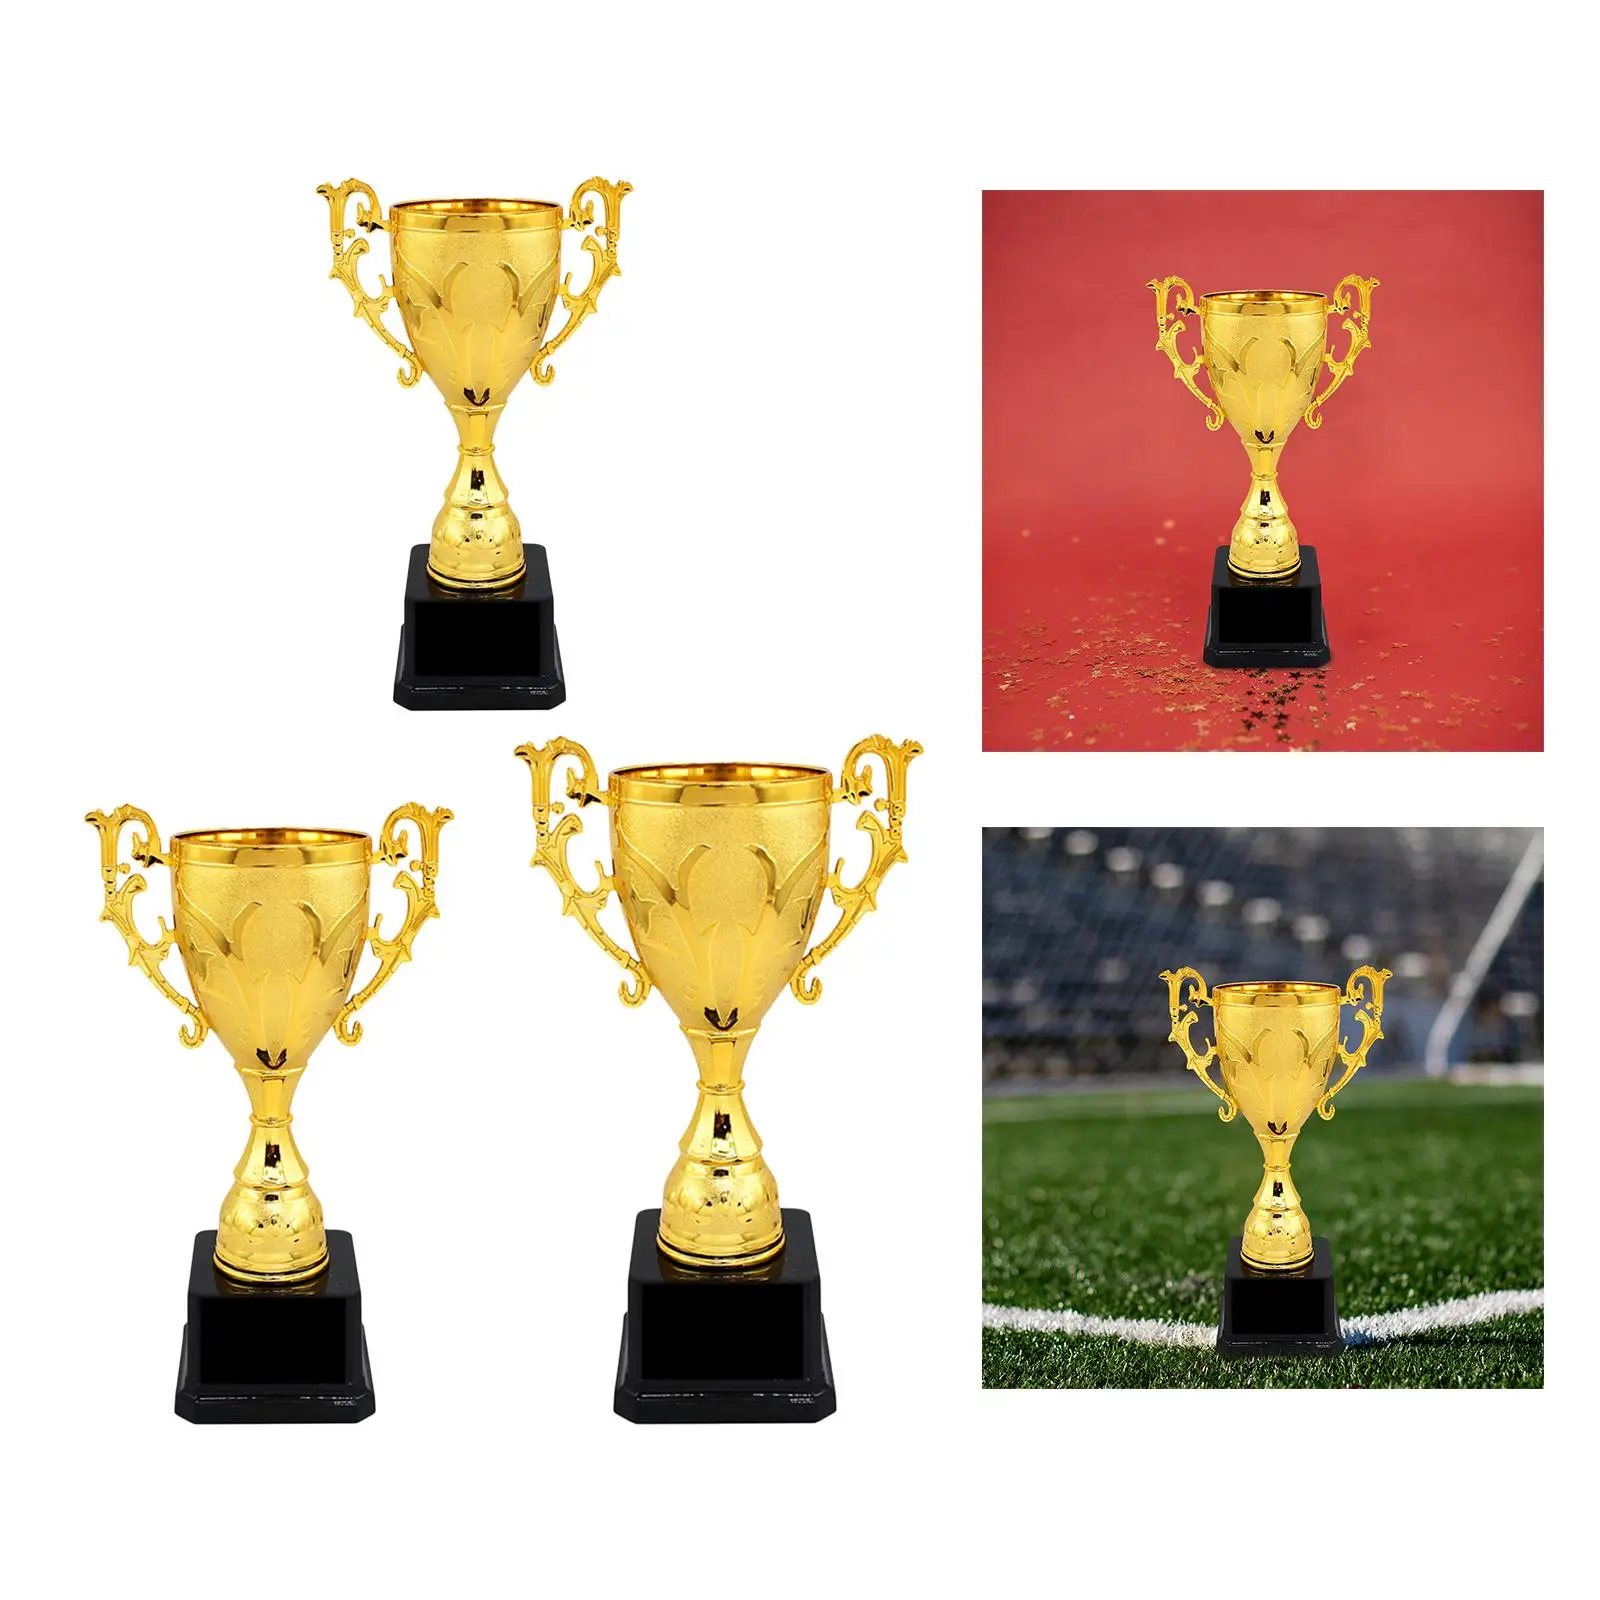 Award trophy, trophy cup for kids, small trophy rewards with base, keepsake,